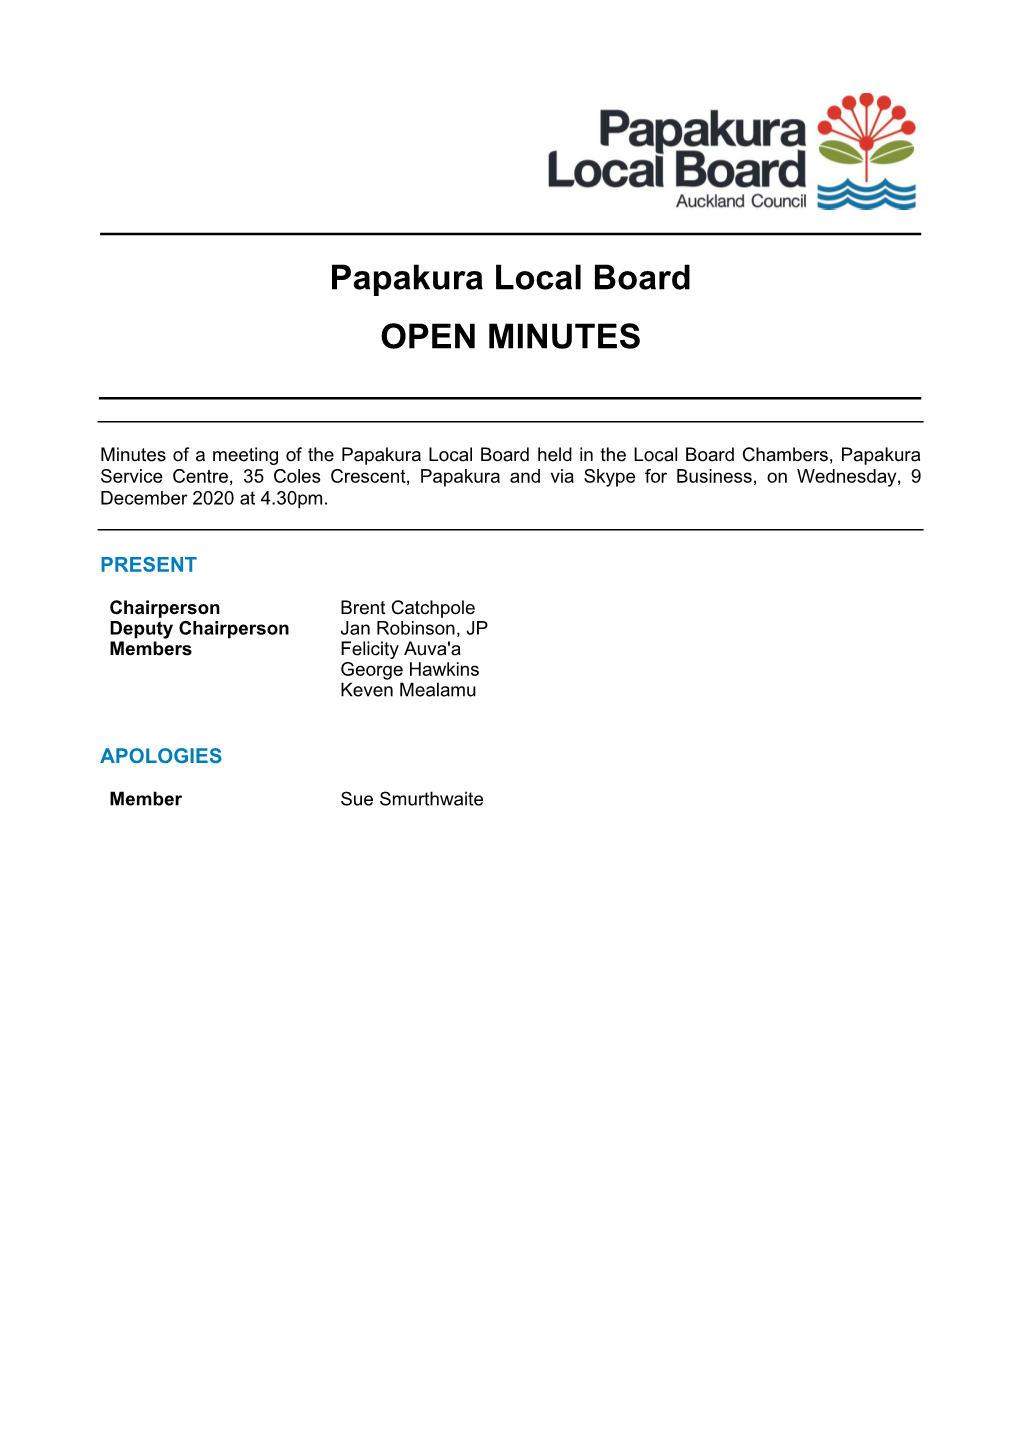 Minutes of Papakura Local Board